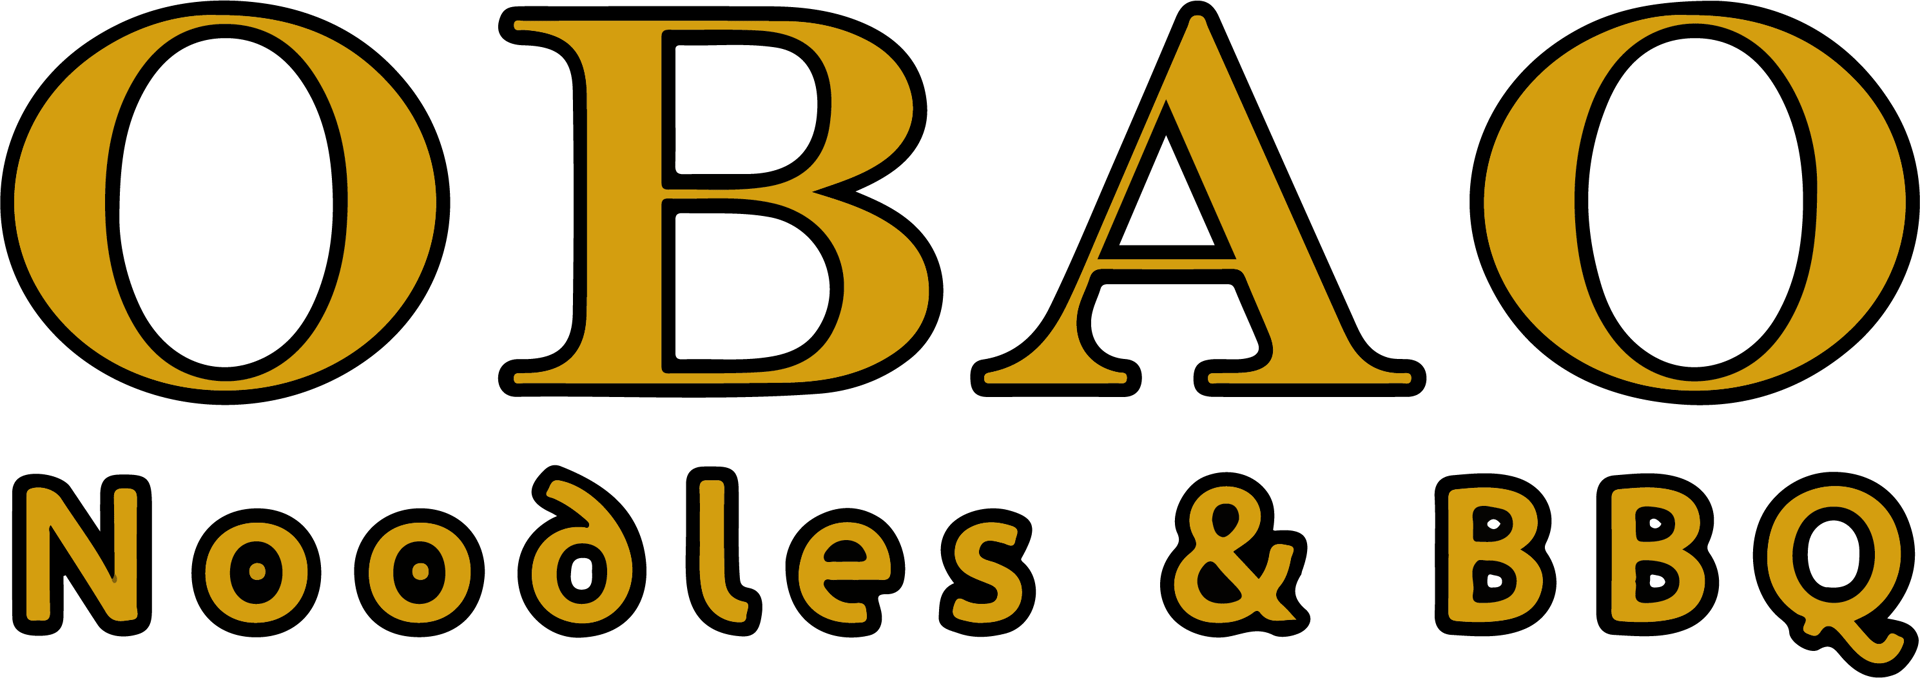 obao noodles & bbq logo